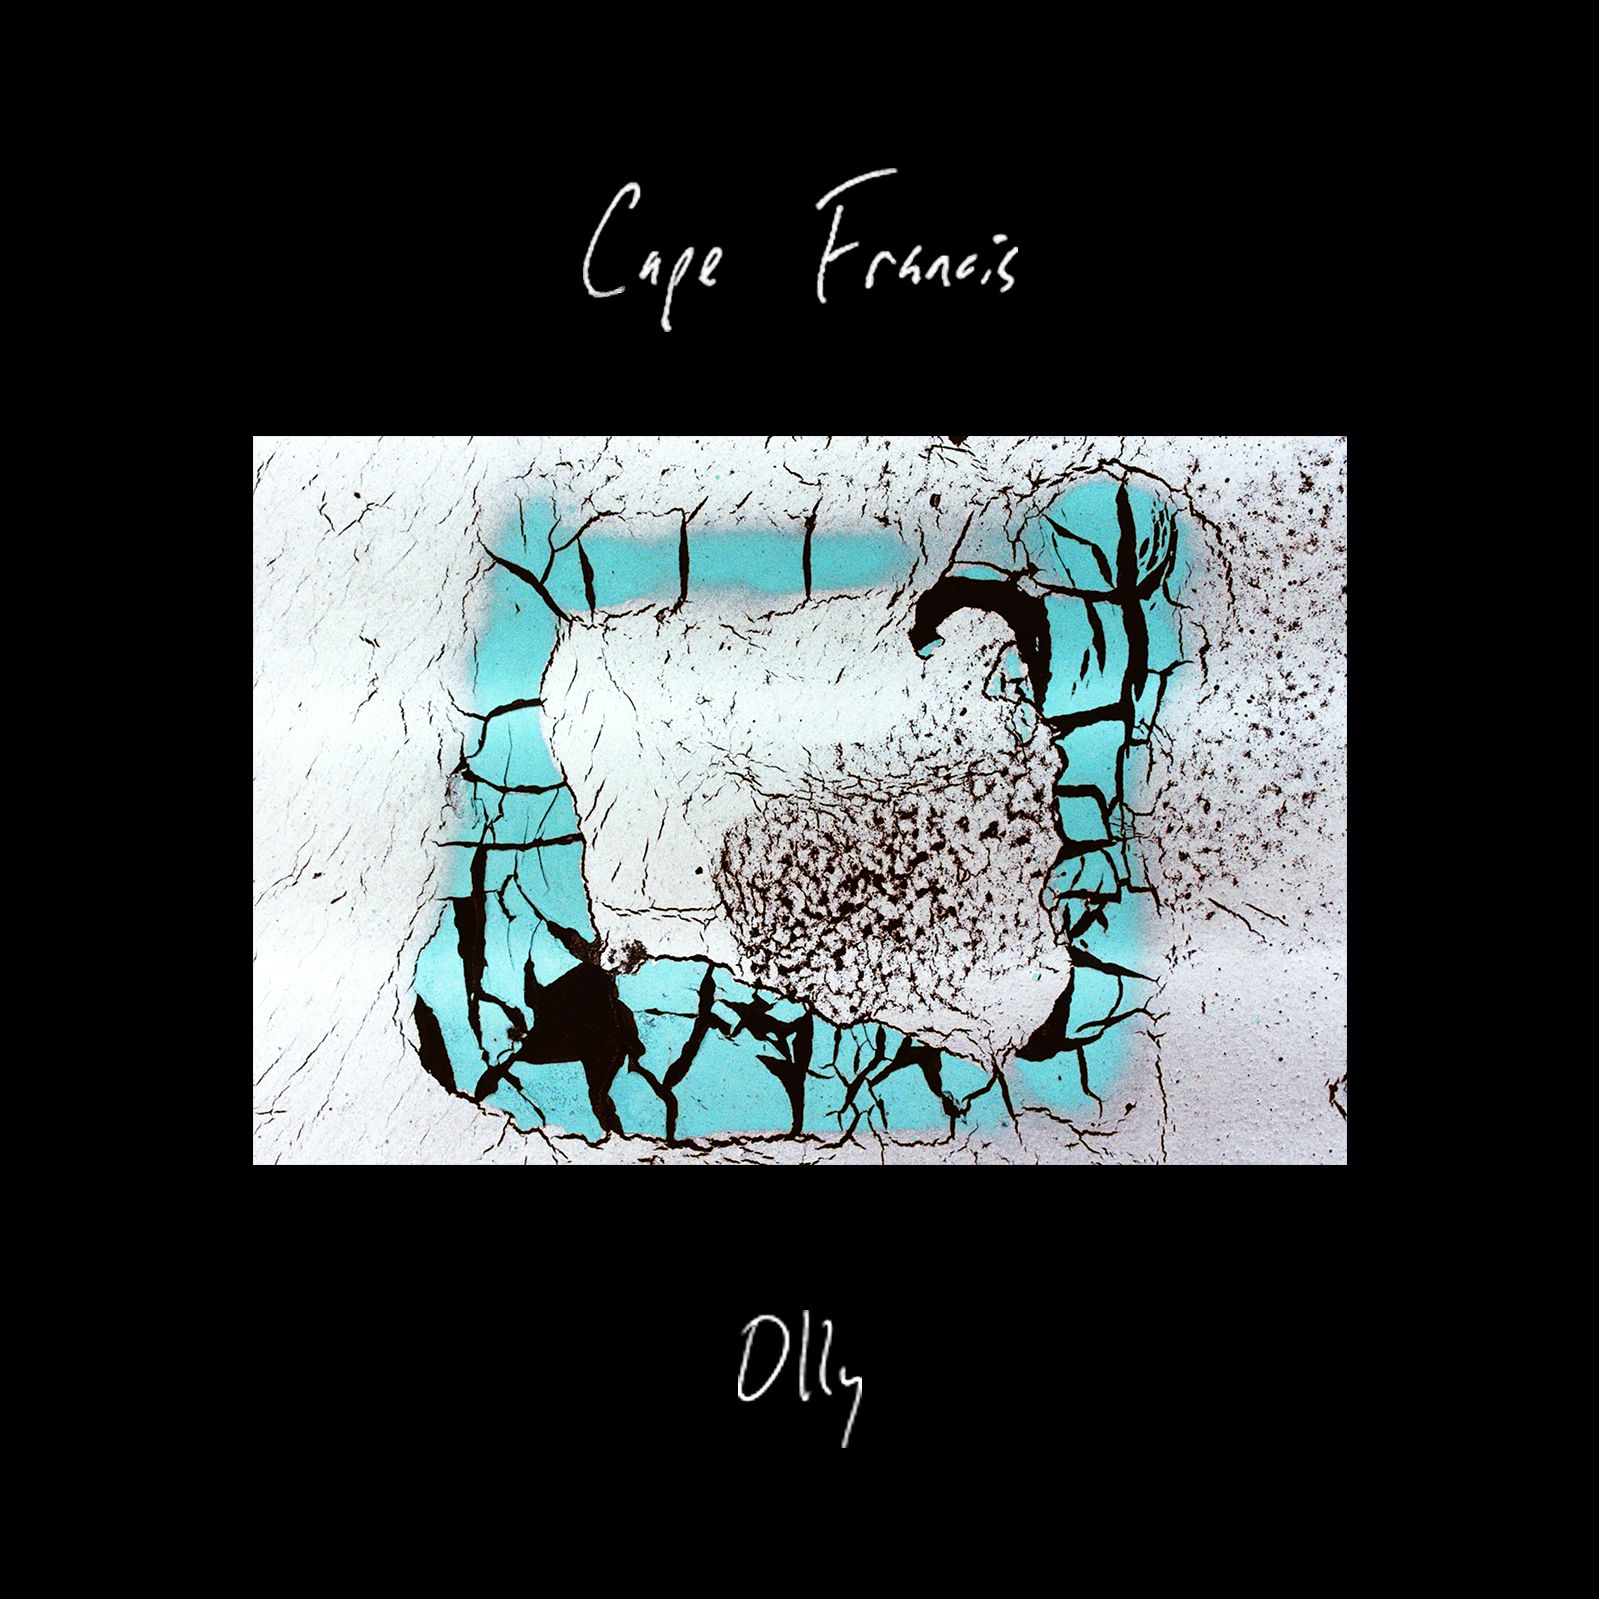 Cape Francis – “Olly”